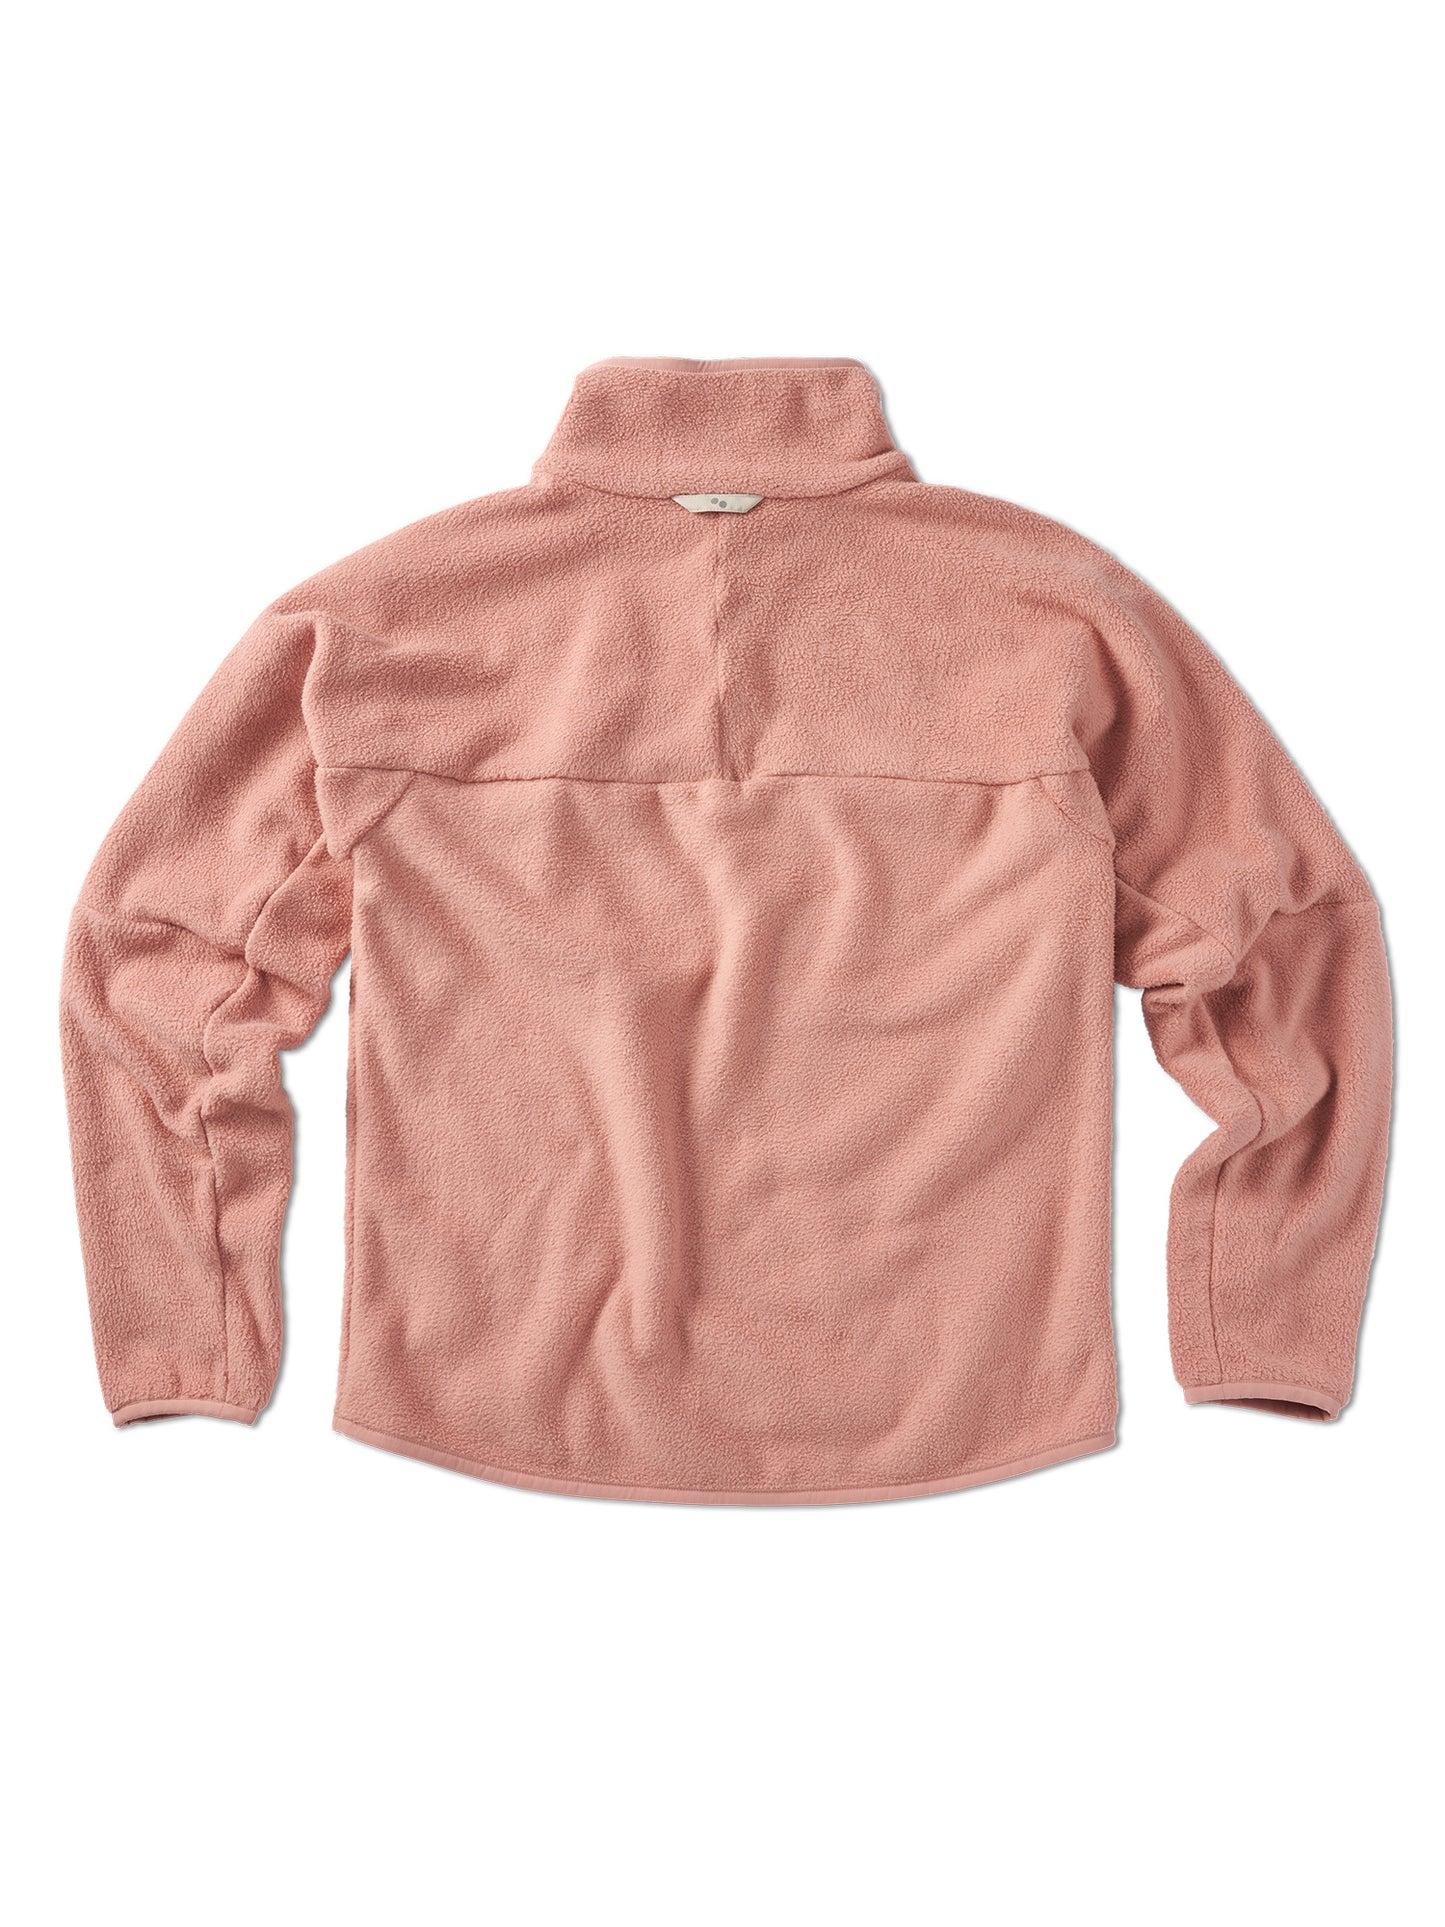 pinqponq-Fleece-Pullover-Unisex-Ash-Pink-back